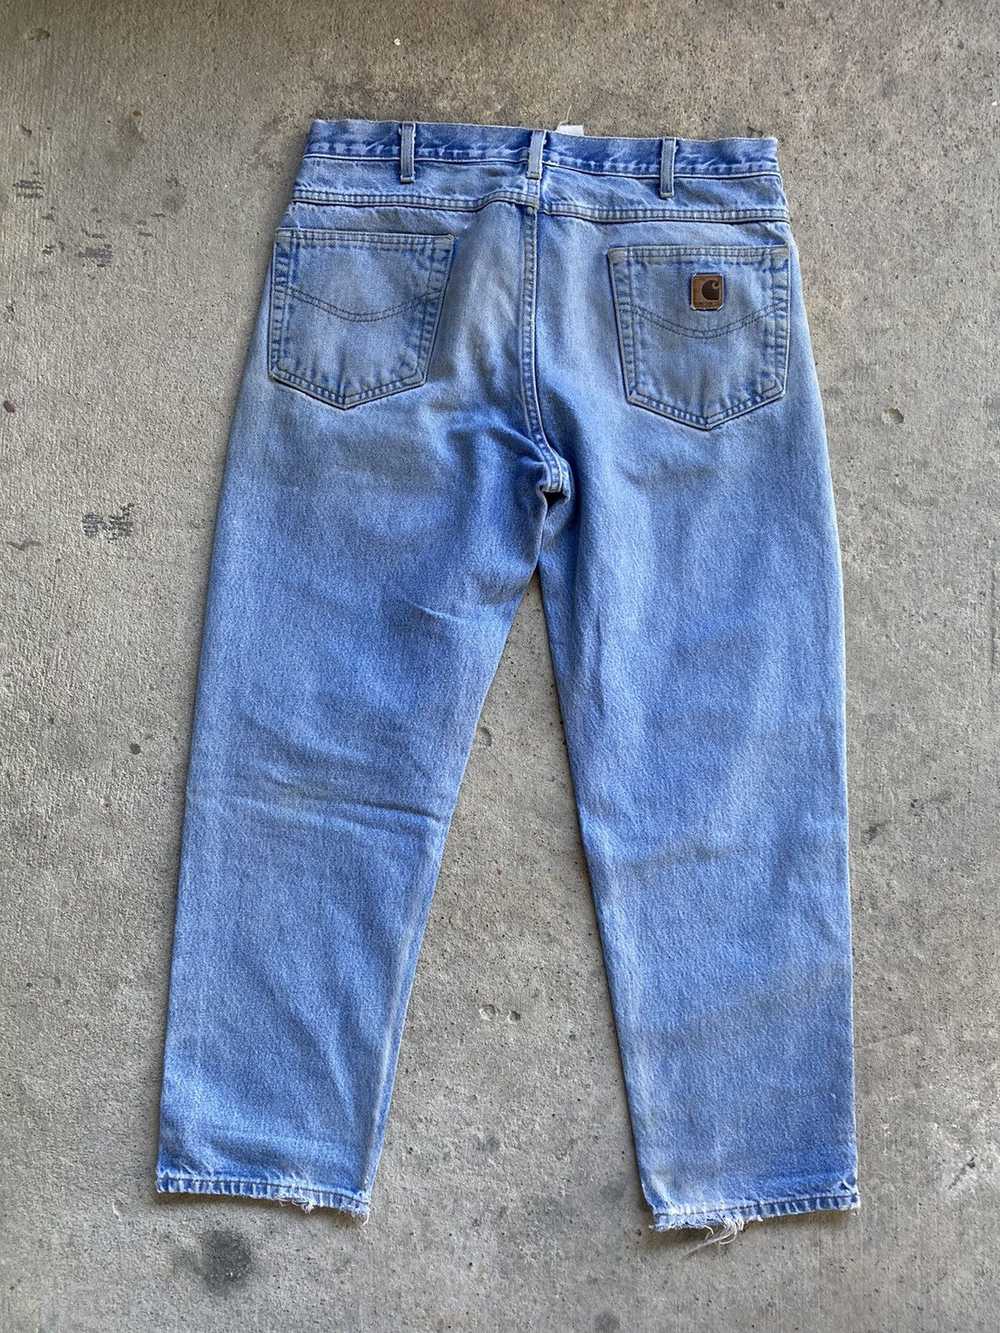 Carhartt × Vintage Vintage Carhartt Denim Jeans - image 6